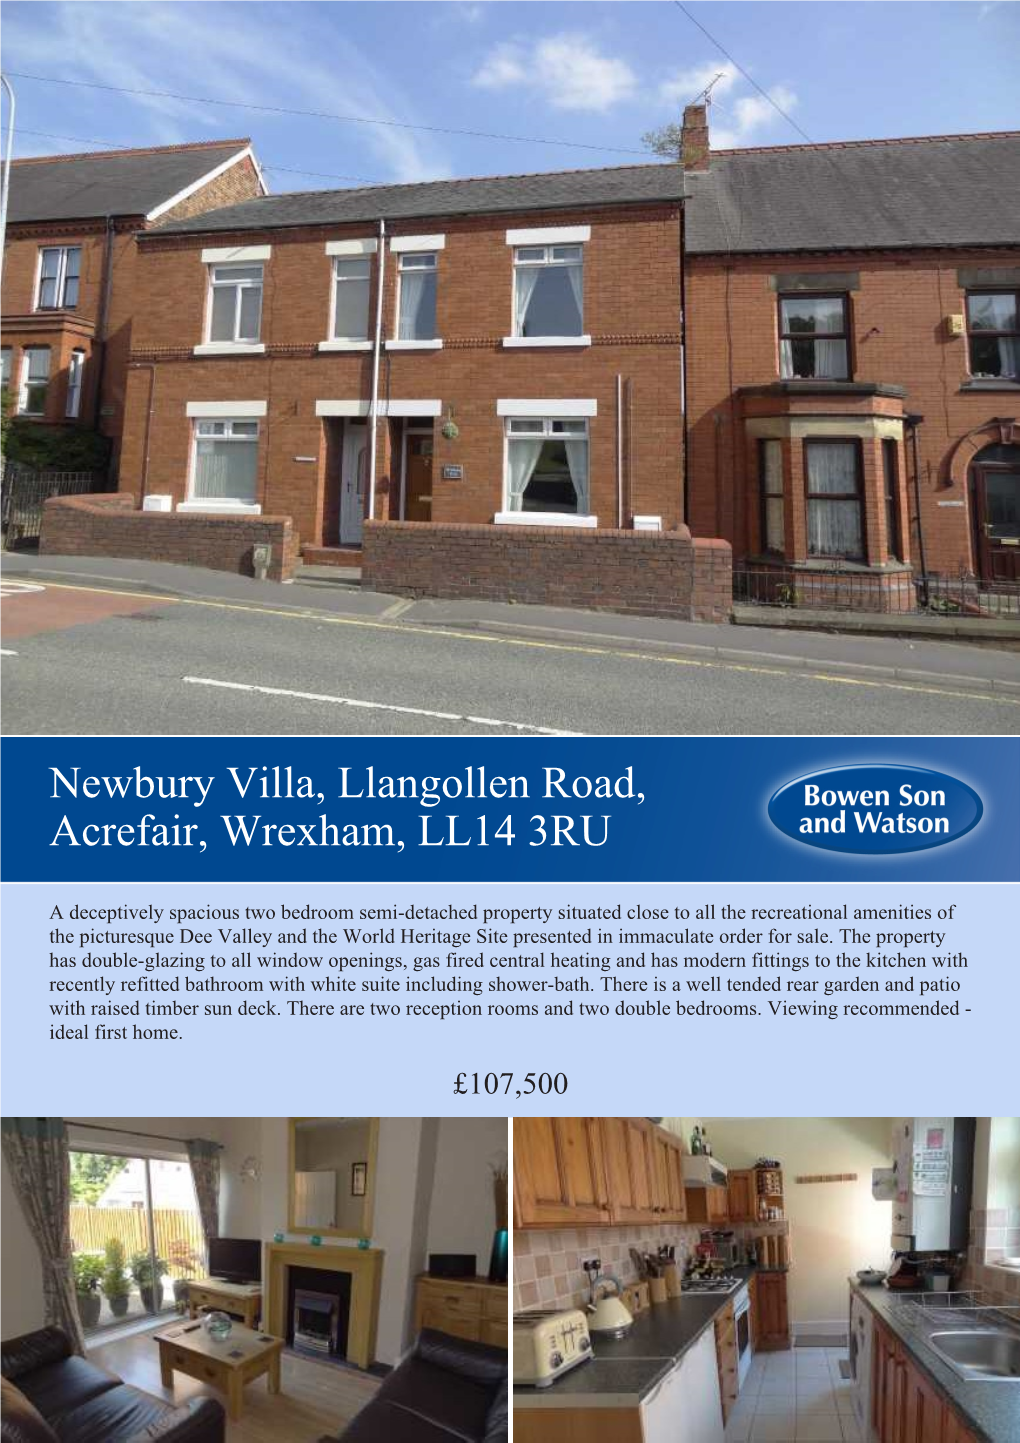 Newbury Villa, Llangollen Road, Acrefair, Wrexham, LL14 3RU